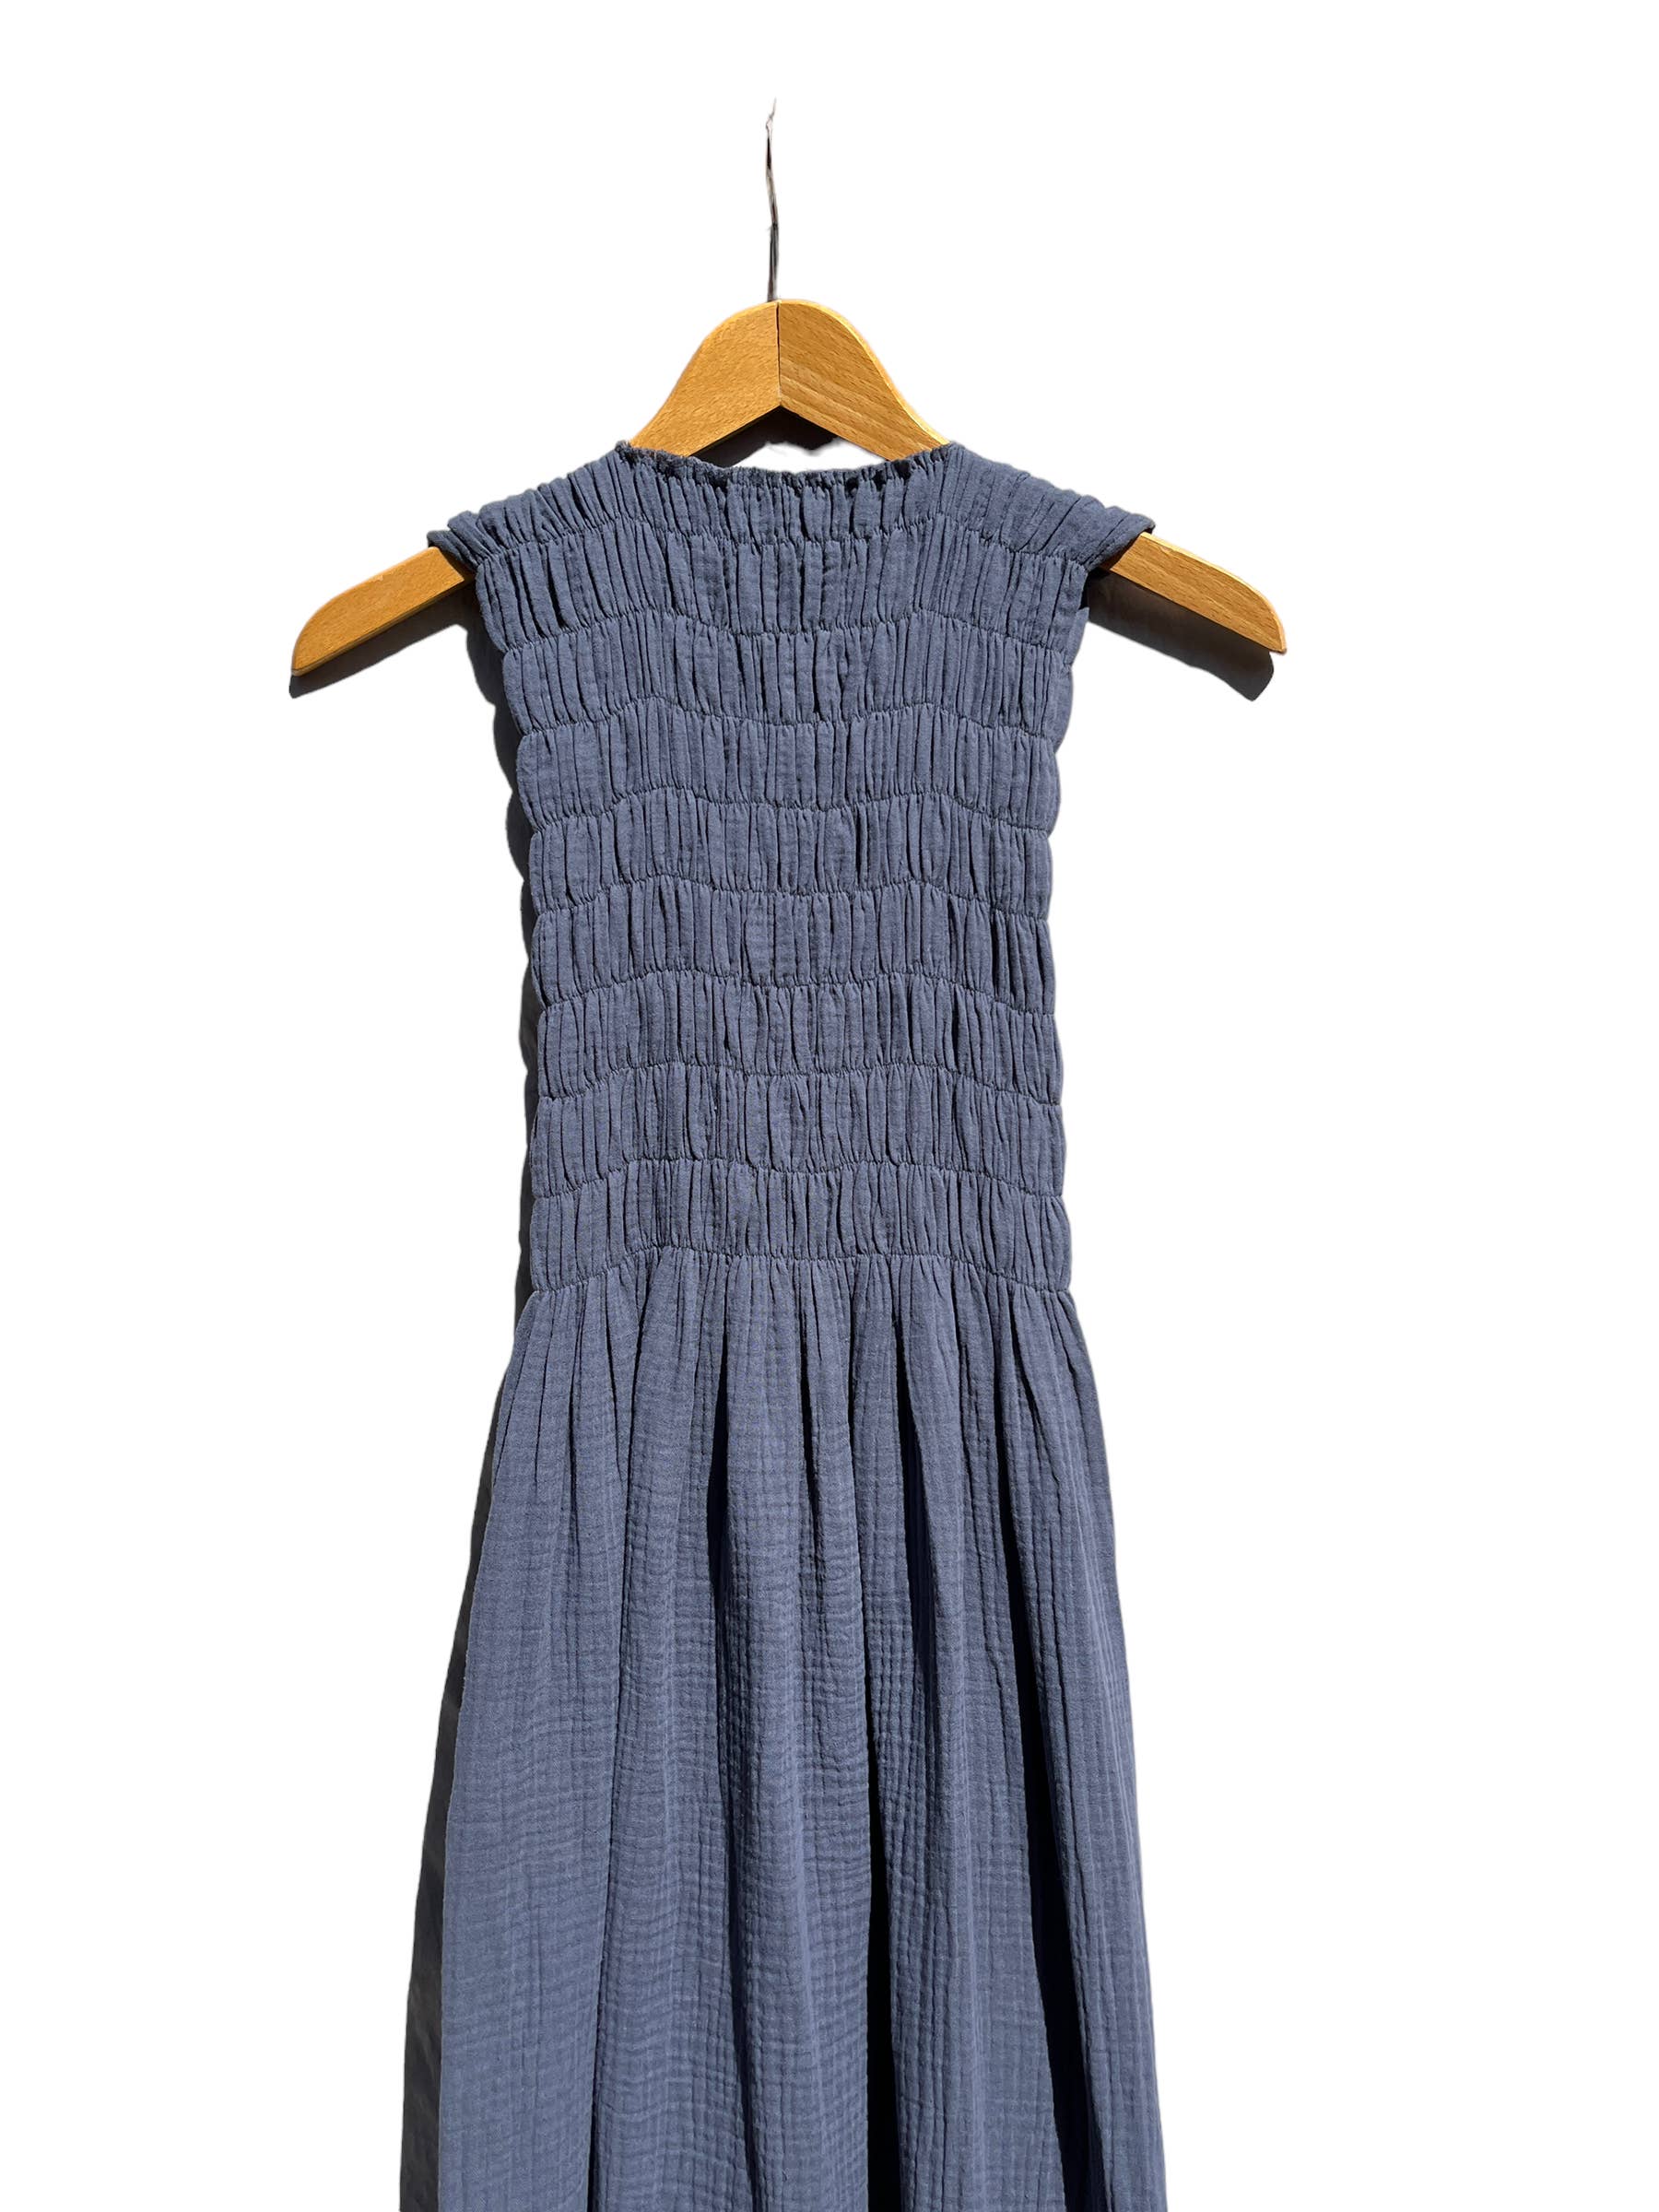 CECILIA SÖRENSEN - 735 ALBER dress Organic cotton muslin / SS24: One Size S-M / Charcoal Grey